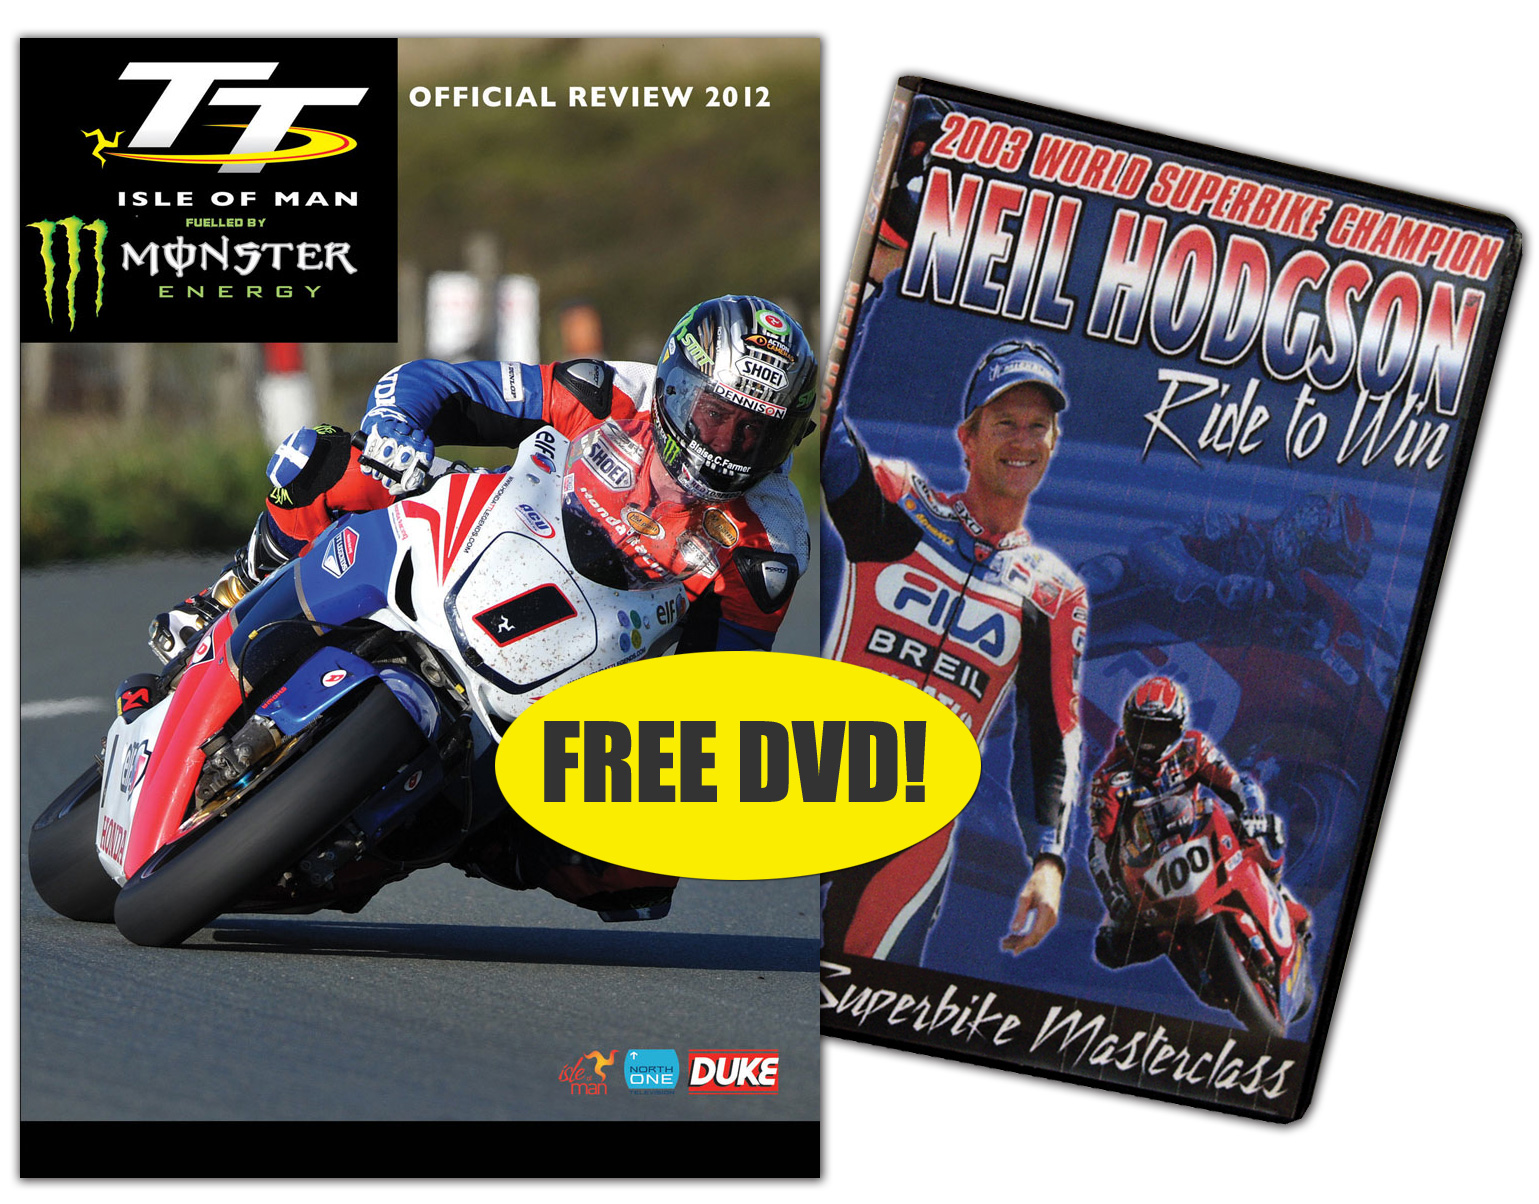 Isle of Man TT 2012 DVD and Neil Hodgson Ride to Win : Duke Video